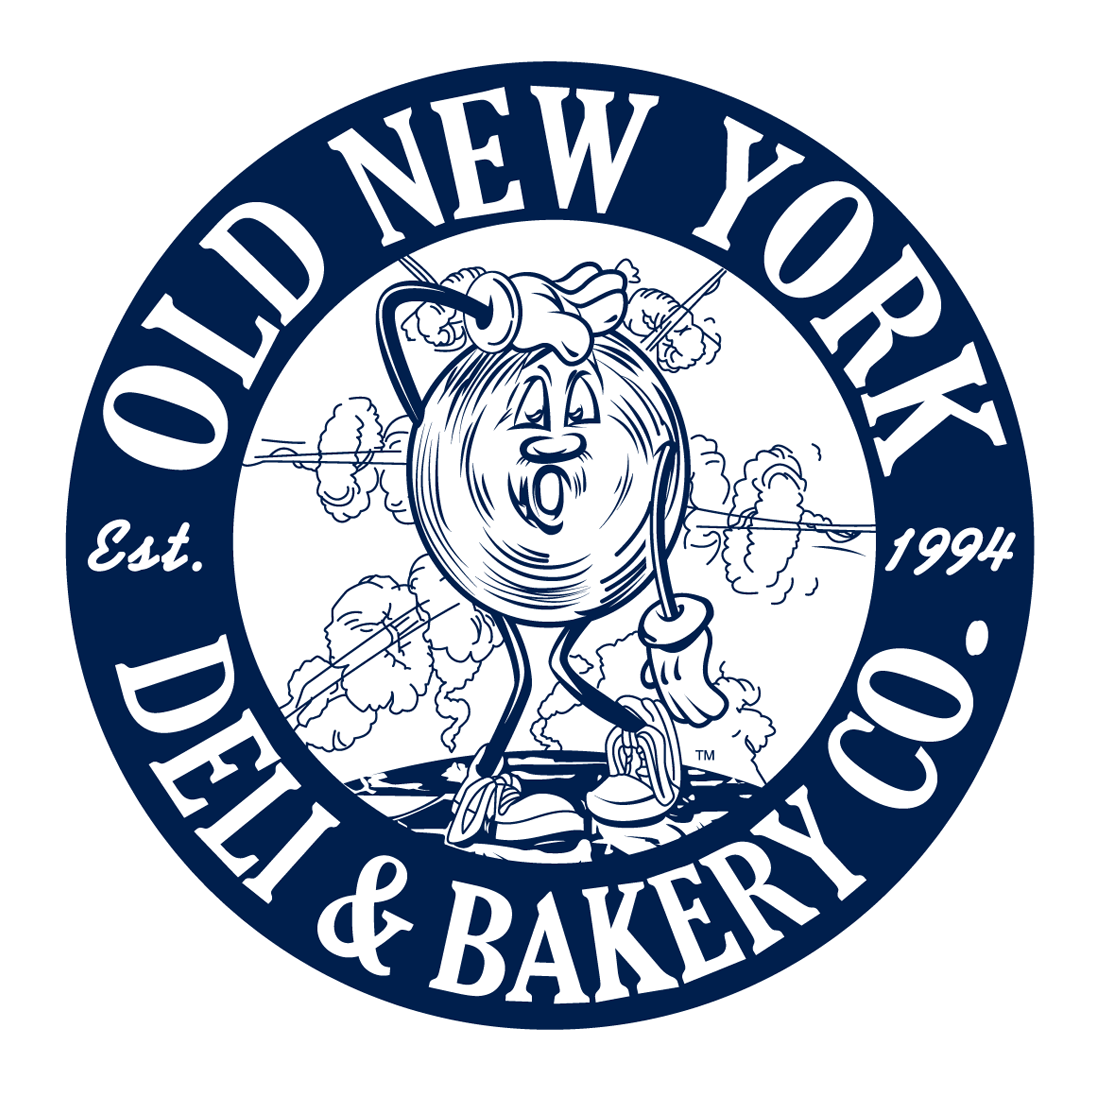 Old New York logo